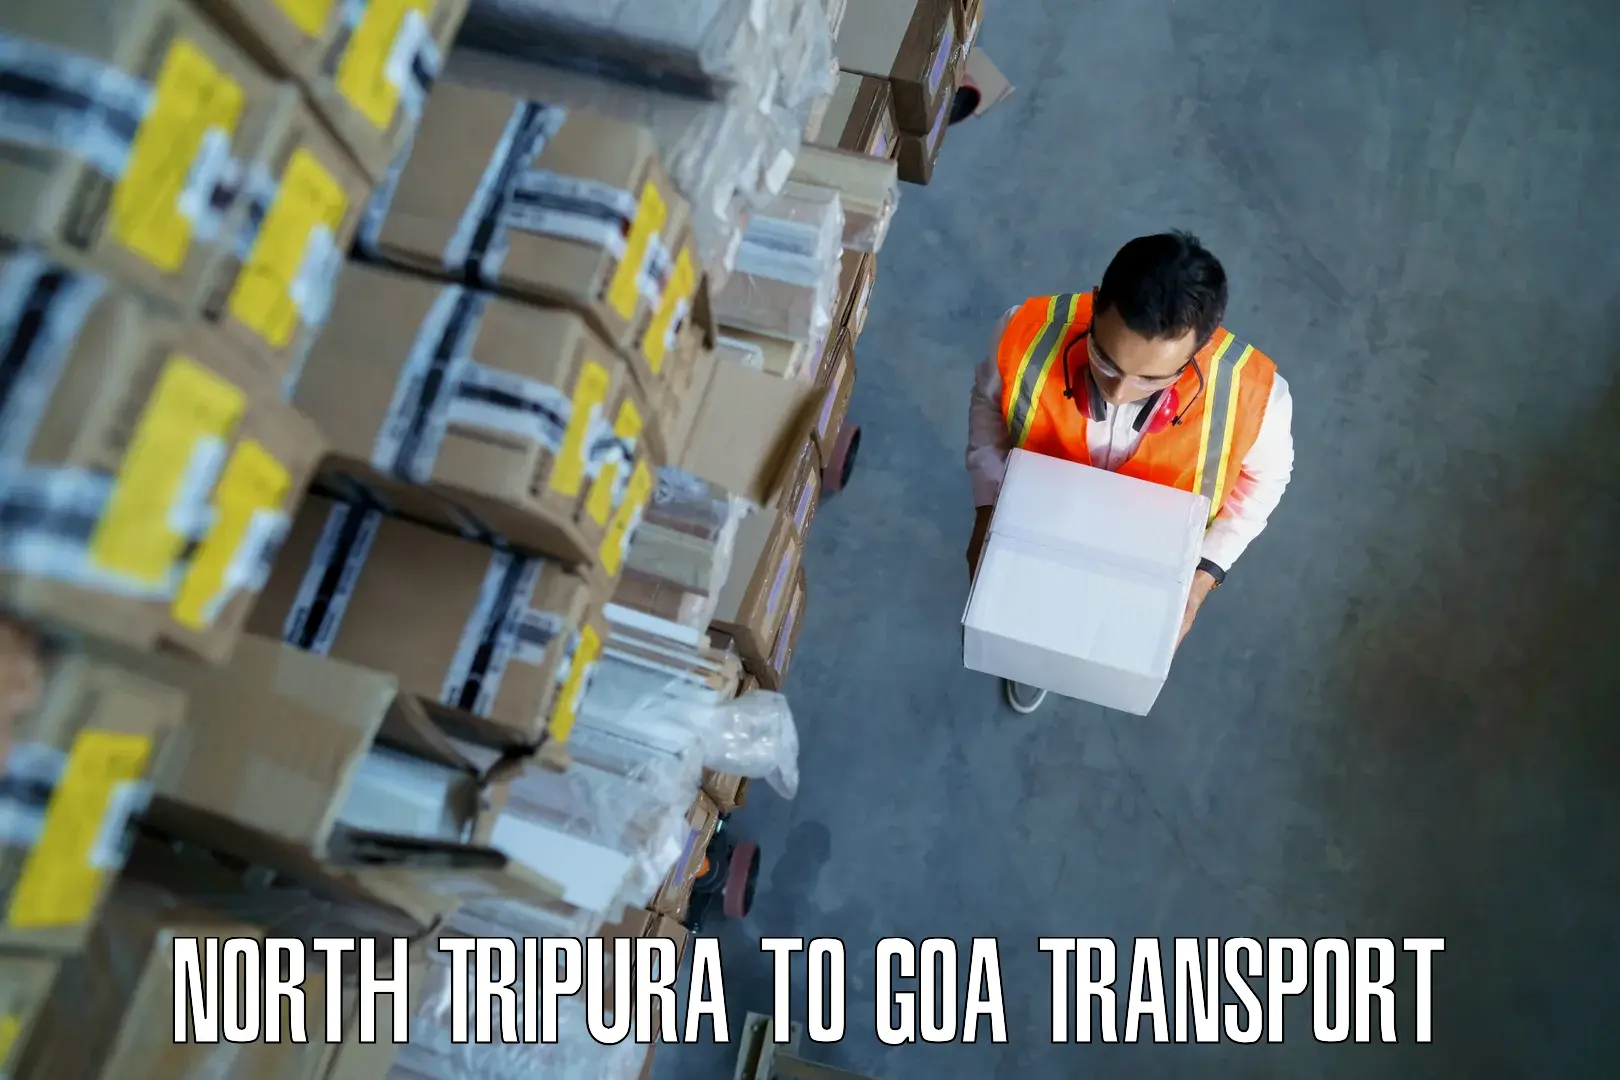 Goods delivery service North Tripura to Goa